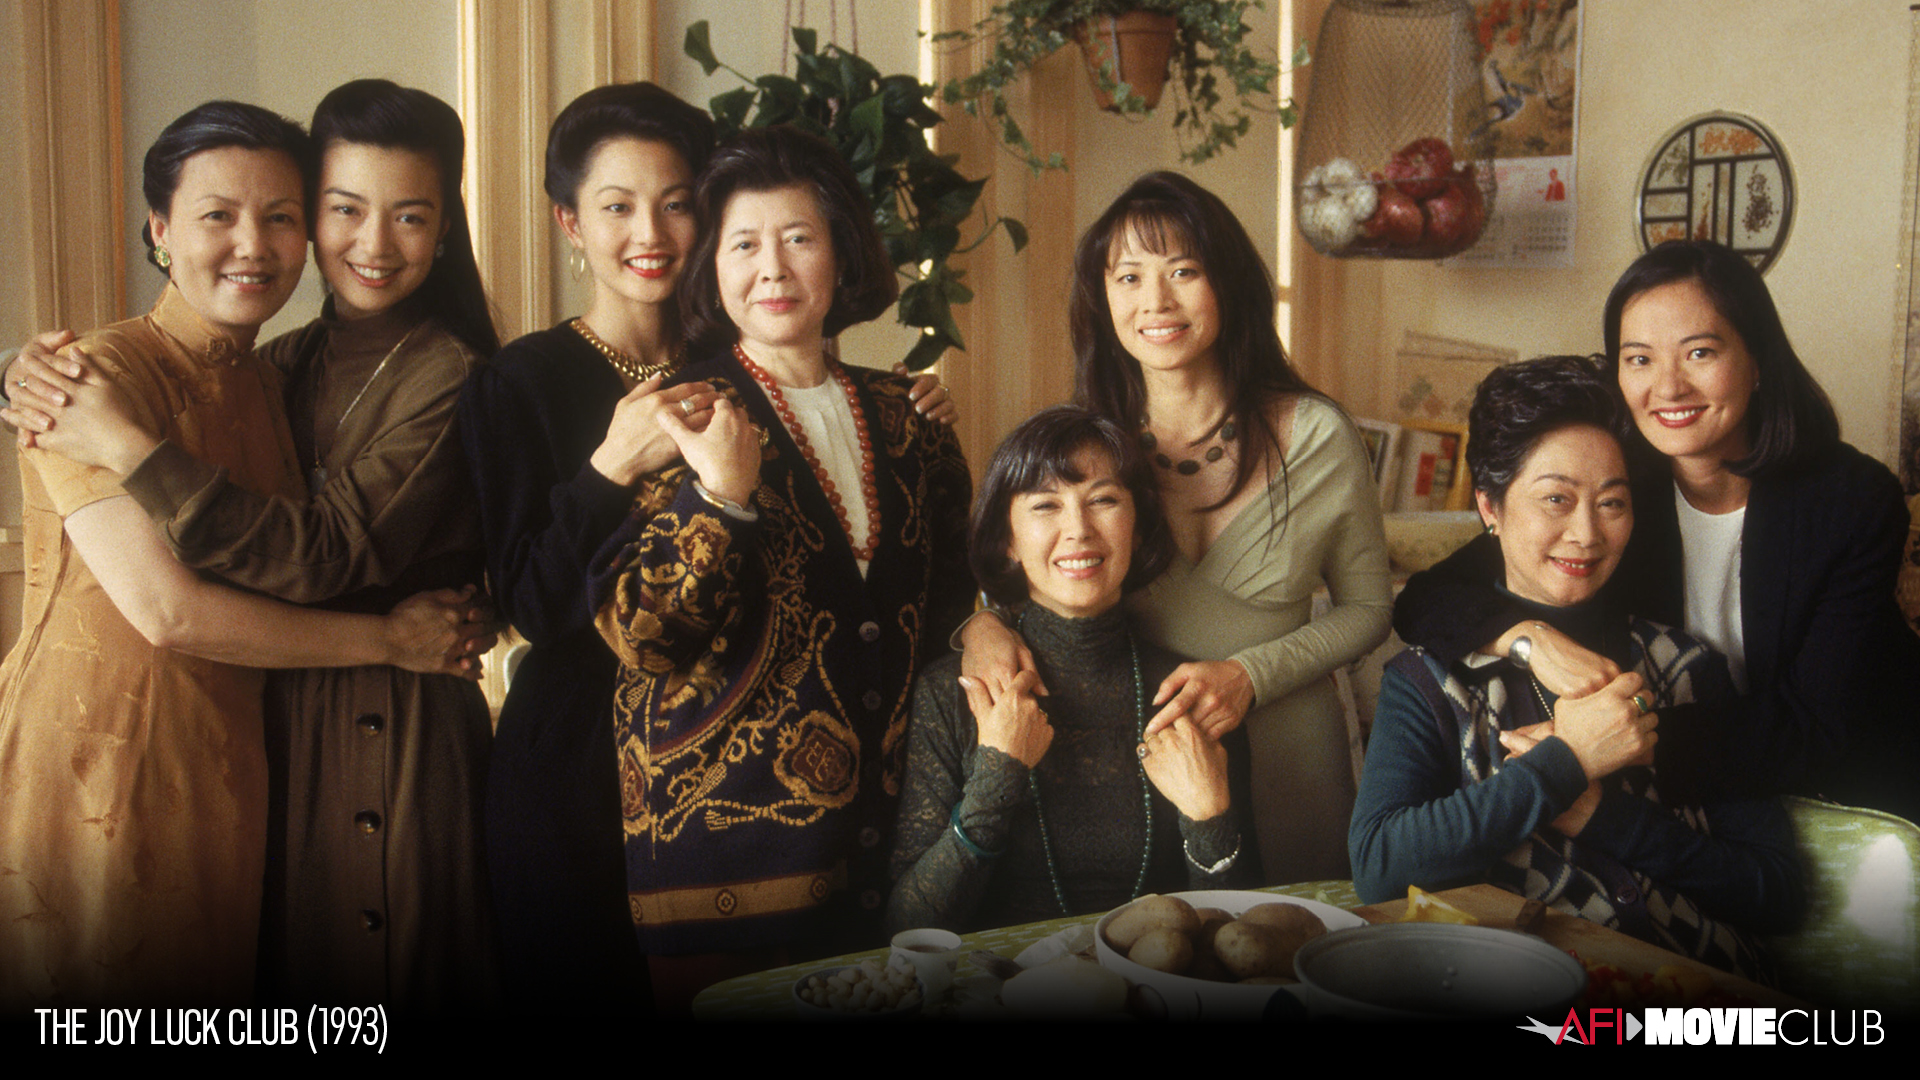 The Joy Luck Club Film Still - Tamlyn Tomita, Rosalind Chao, Ming-Na Wen, Tsai Chin, Kieu Chinh, Lisa Lu, France Nuyen, and Lauren Tom